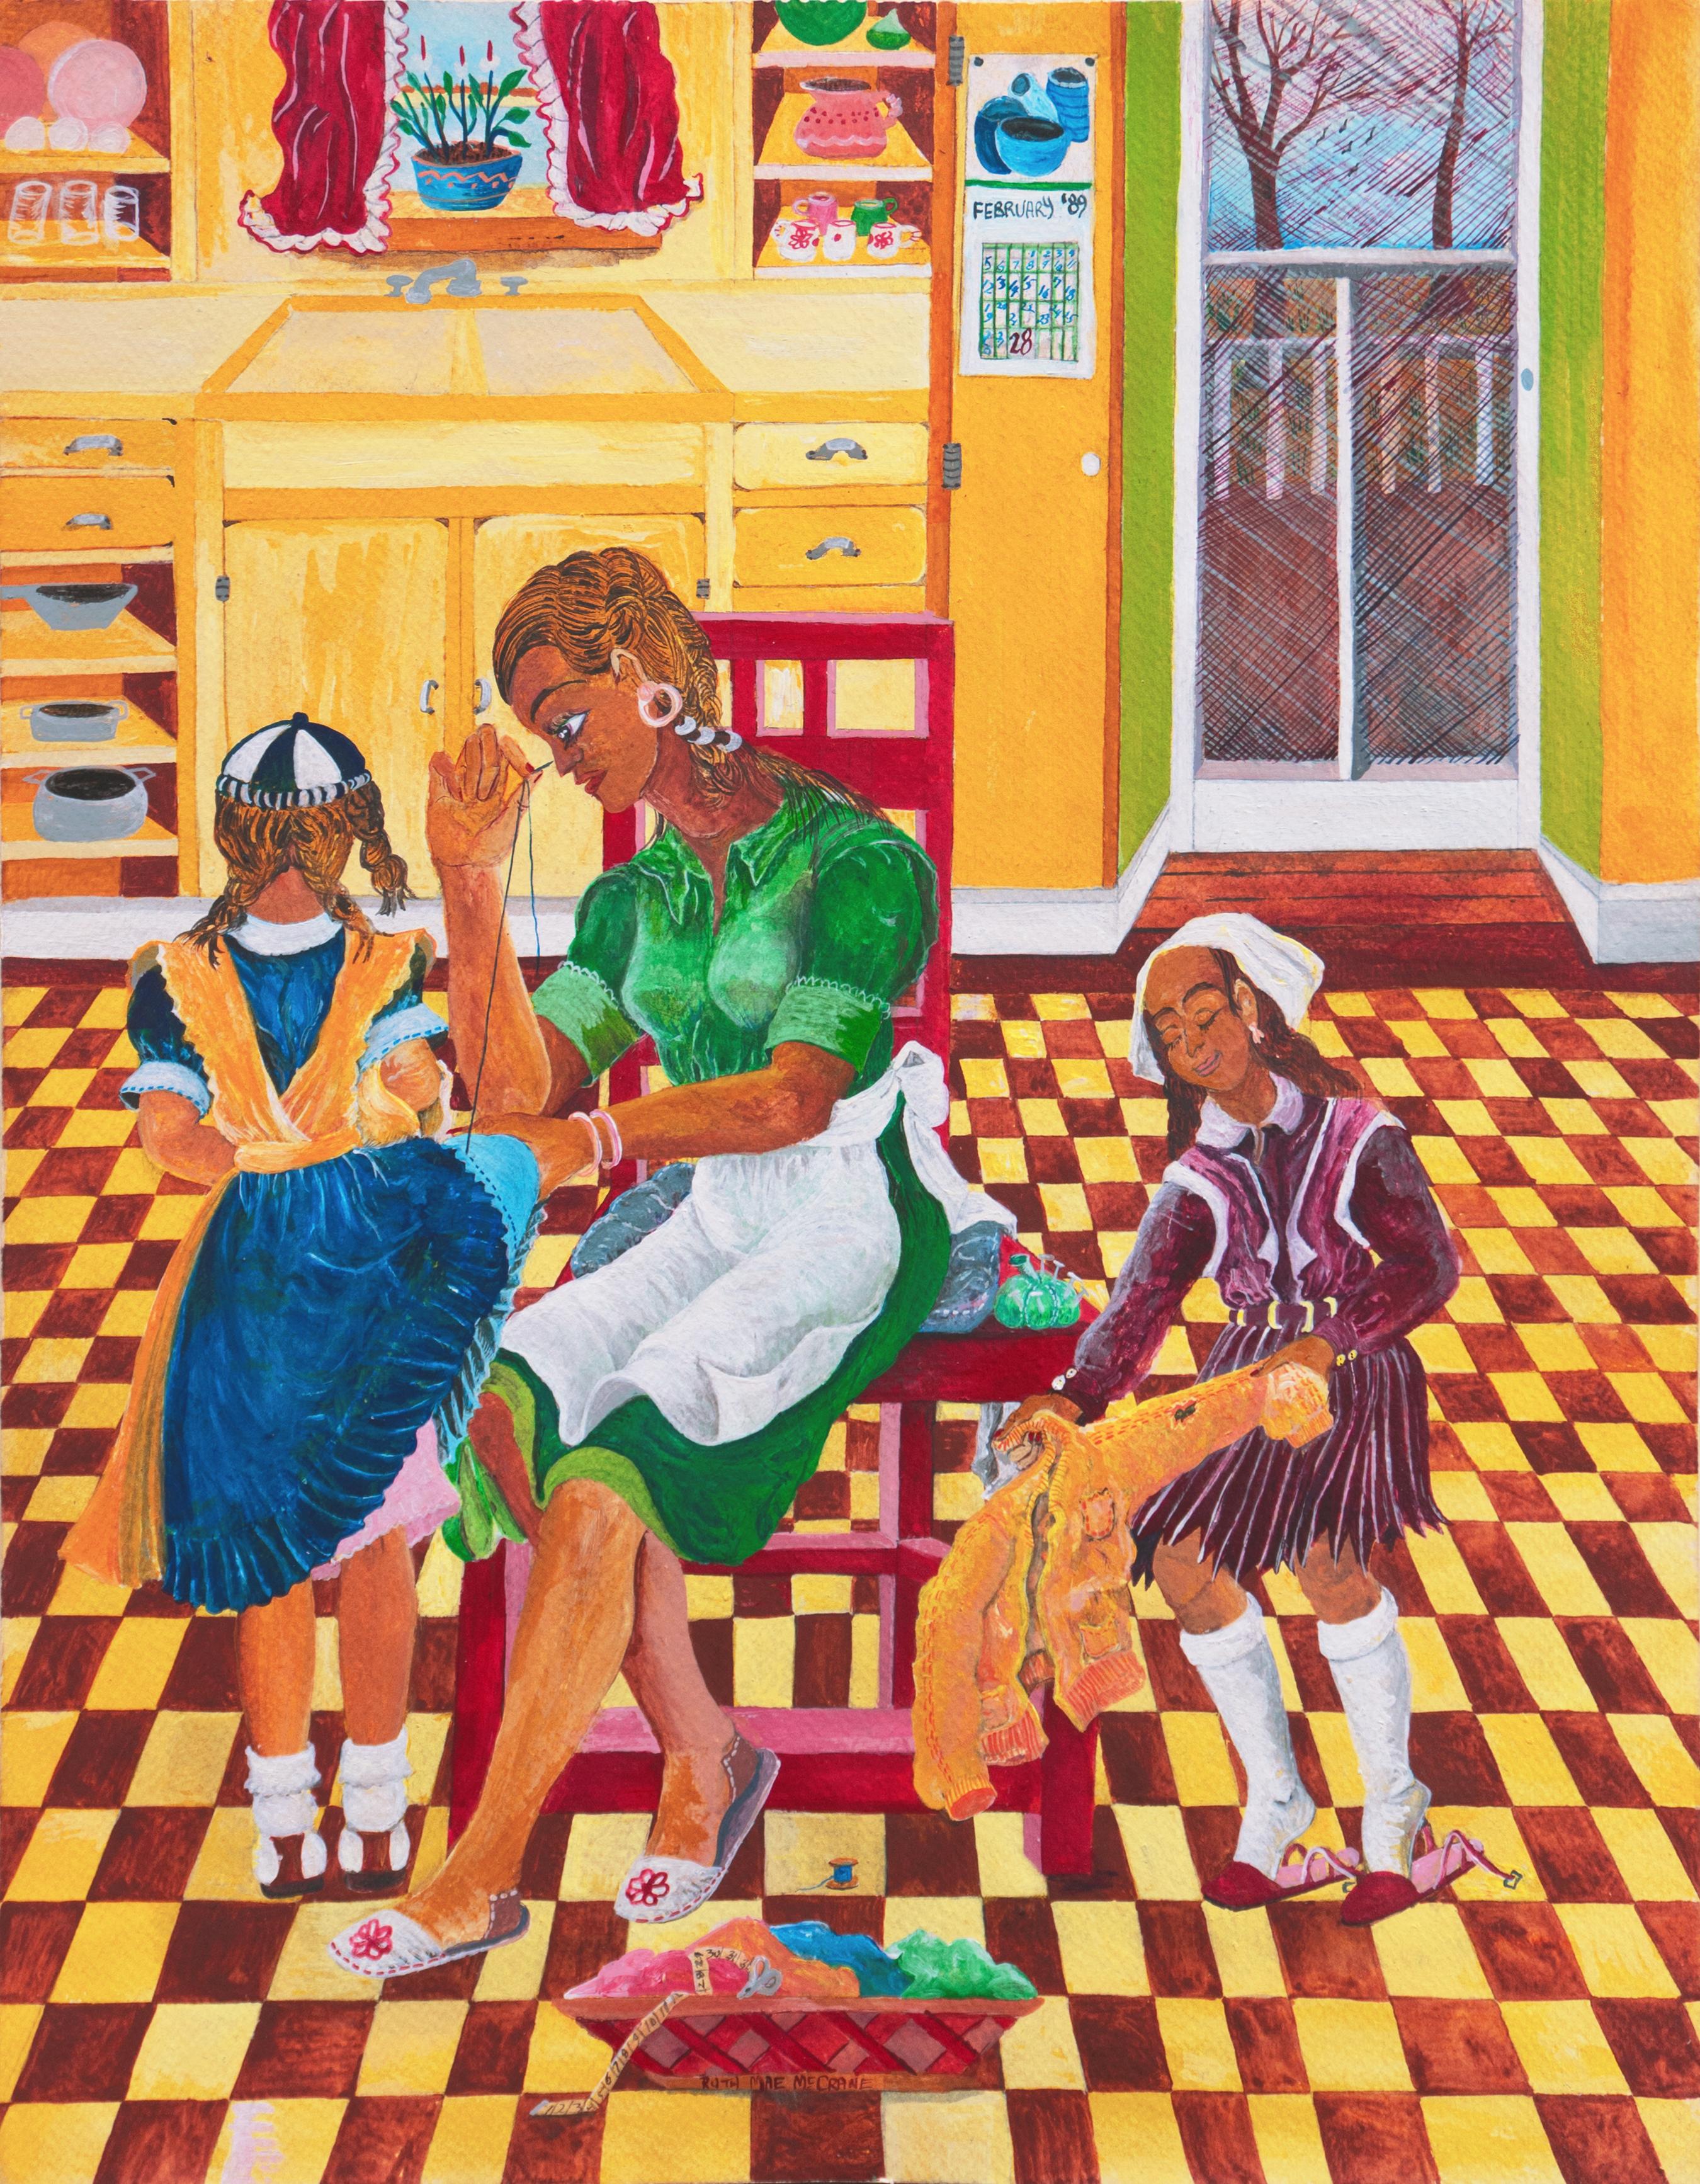 Ruth McCrane Interior Art - 'Mending', African American Woman Folk Artist, Houston, Dallas, Blues Museum Oil